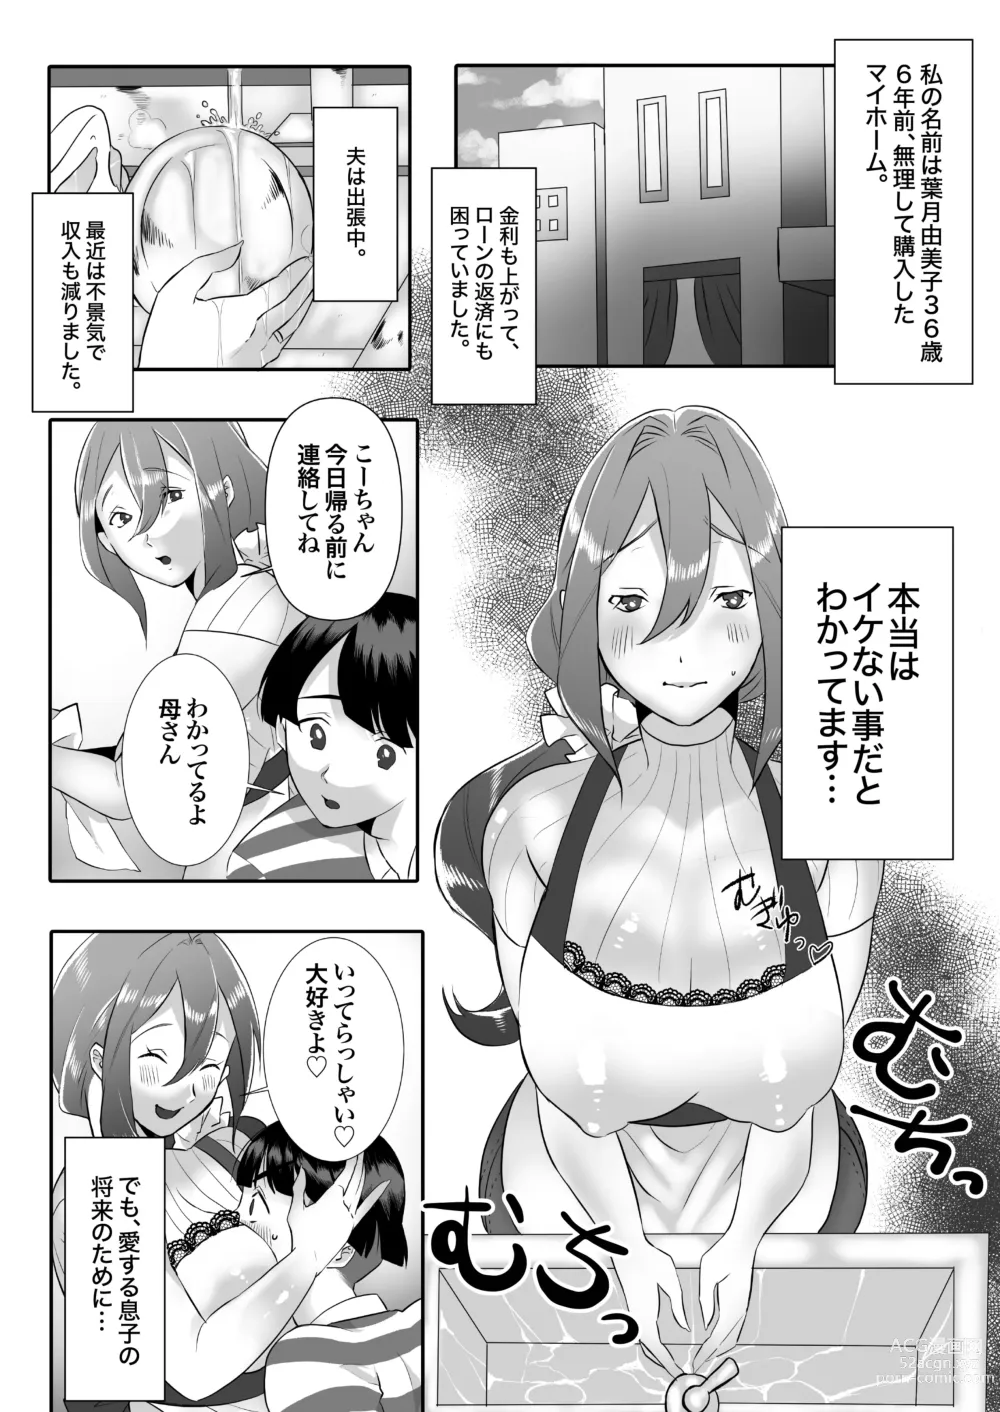 Page 5 of doujinshi DeliHeal Yondara Tomodachi no Kaa-chan ga Kita.